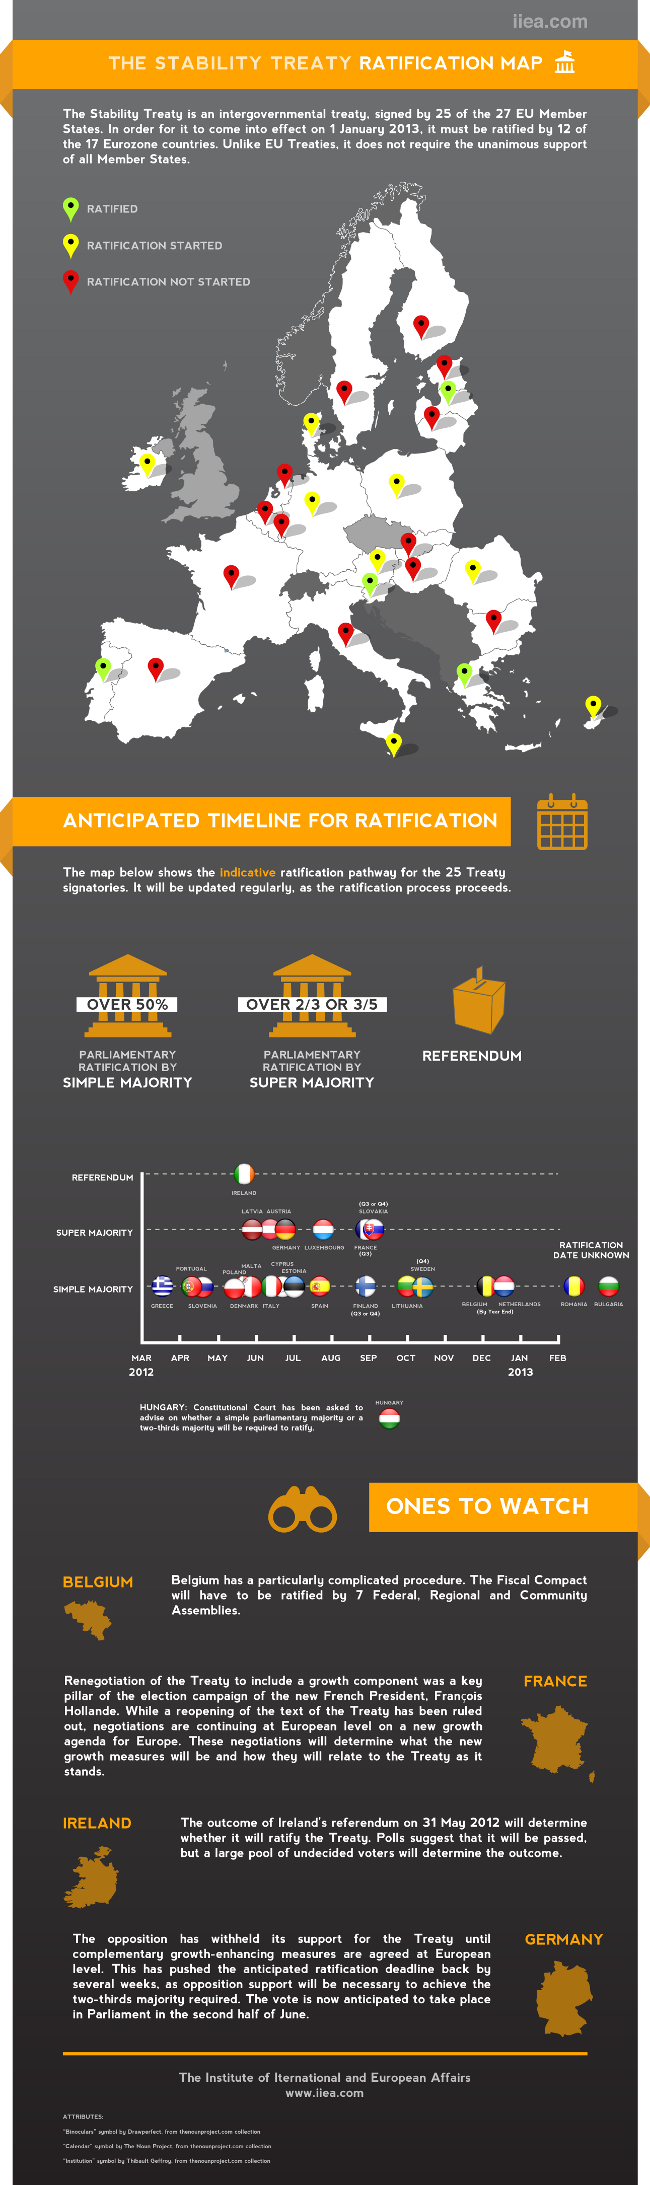 IIEA infographic